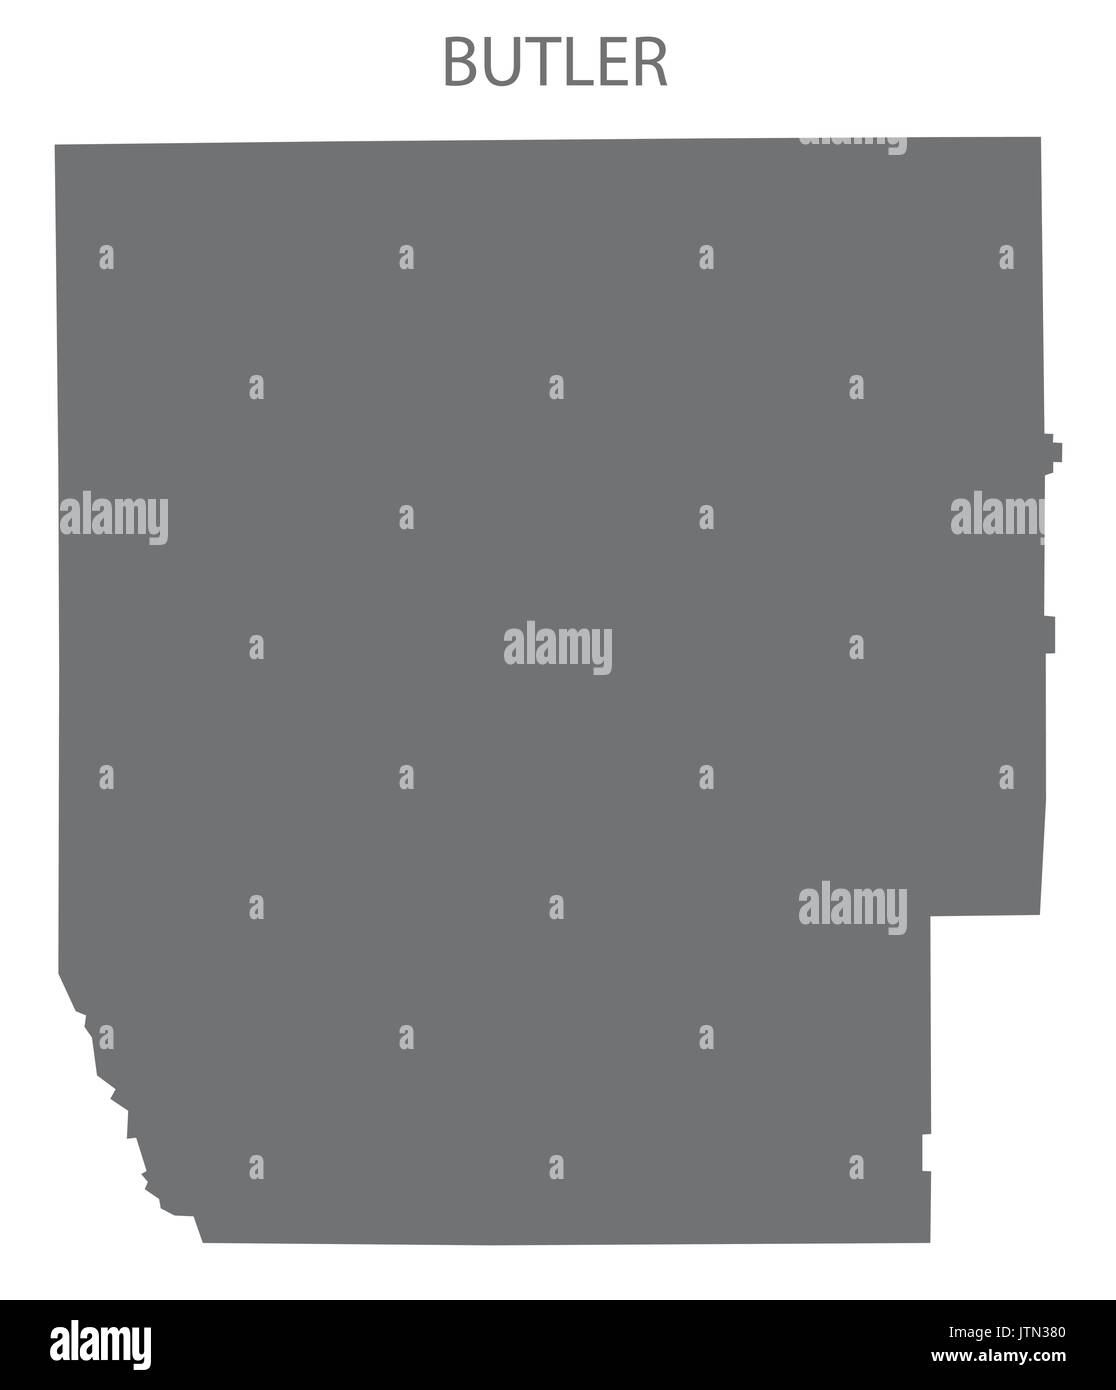 Butler County Karte von Alabama USA Grau Abbildung Silhouette Stock Vektor